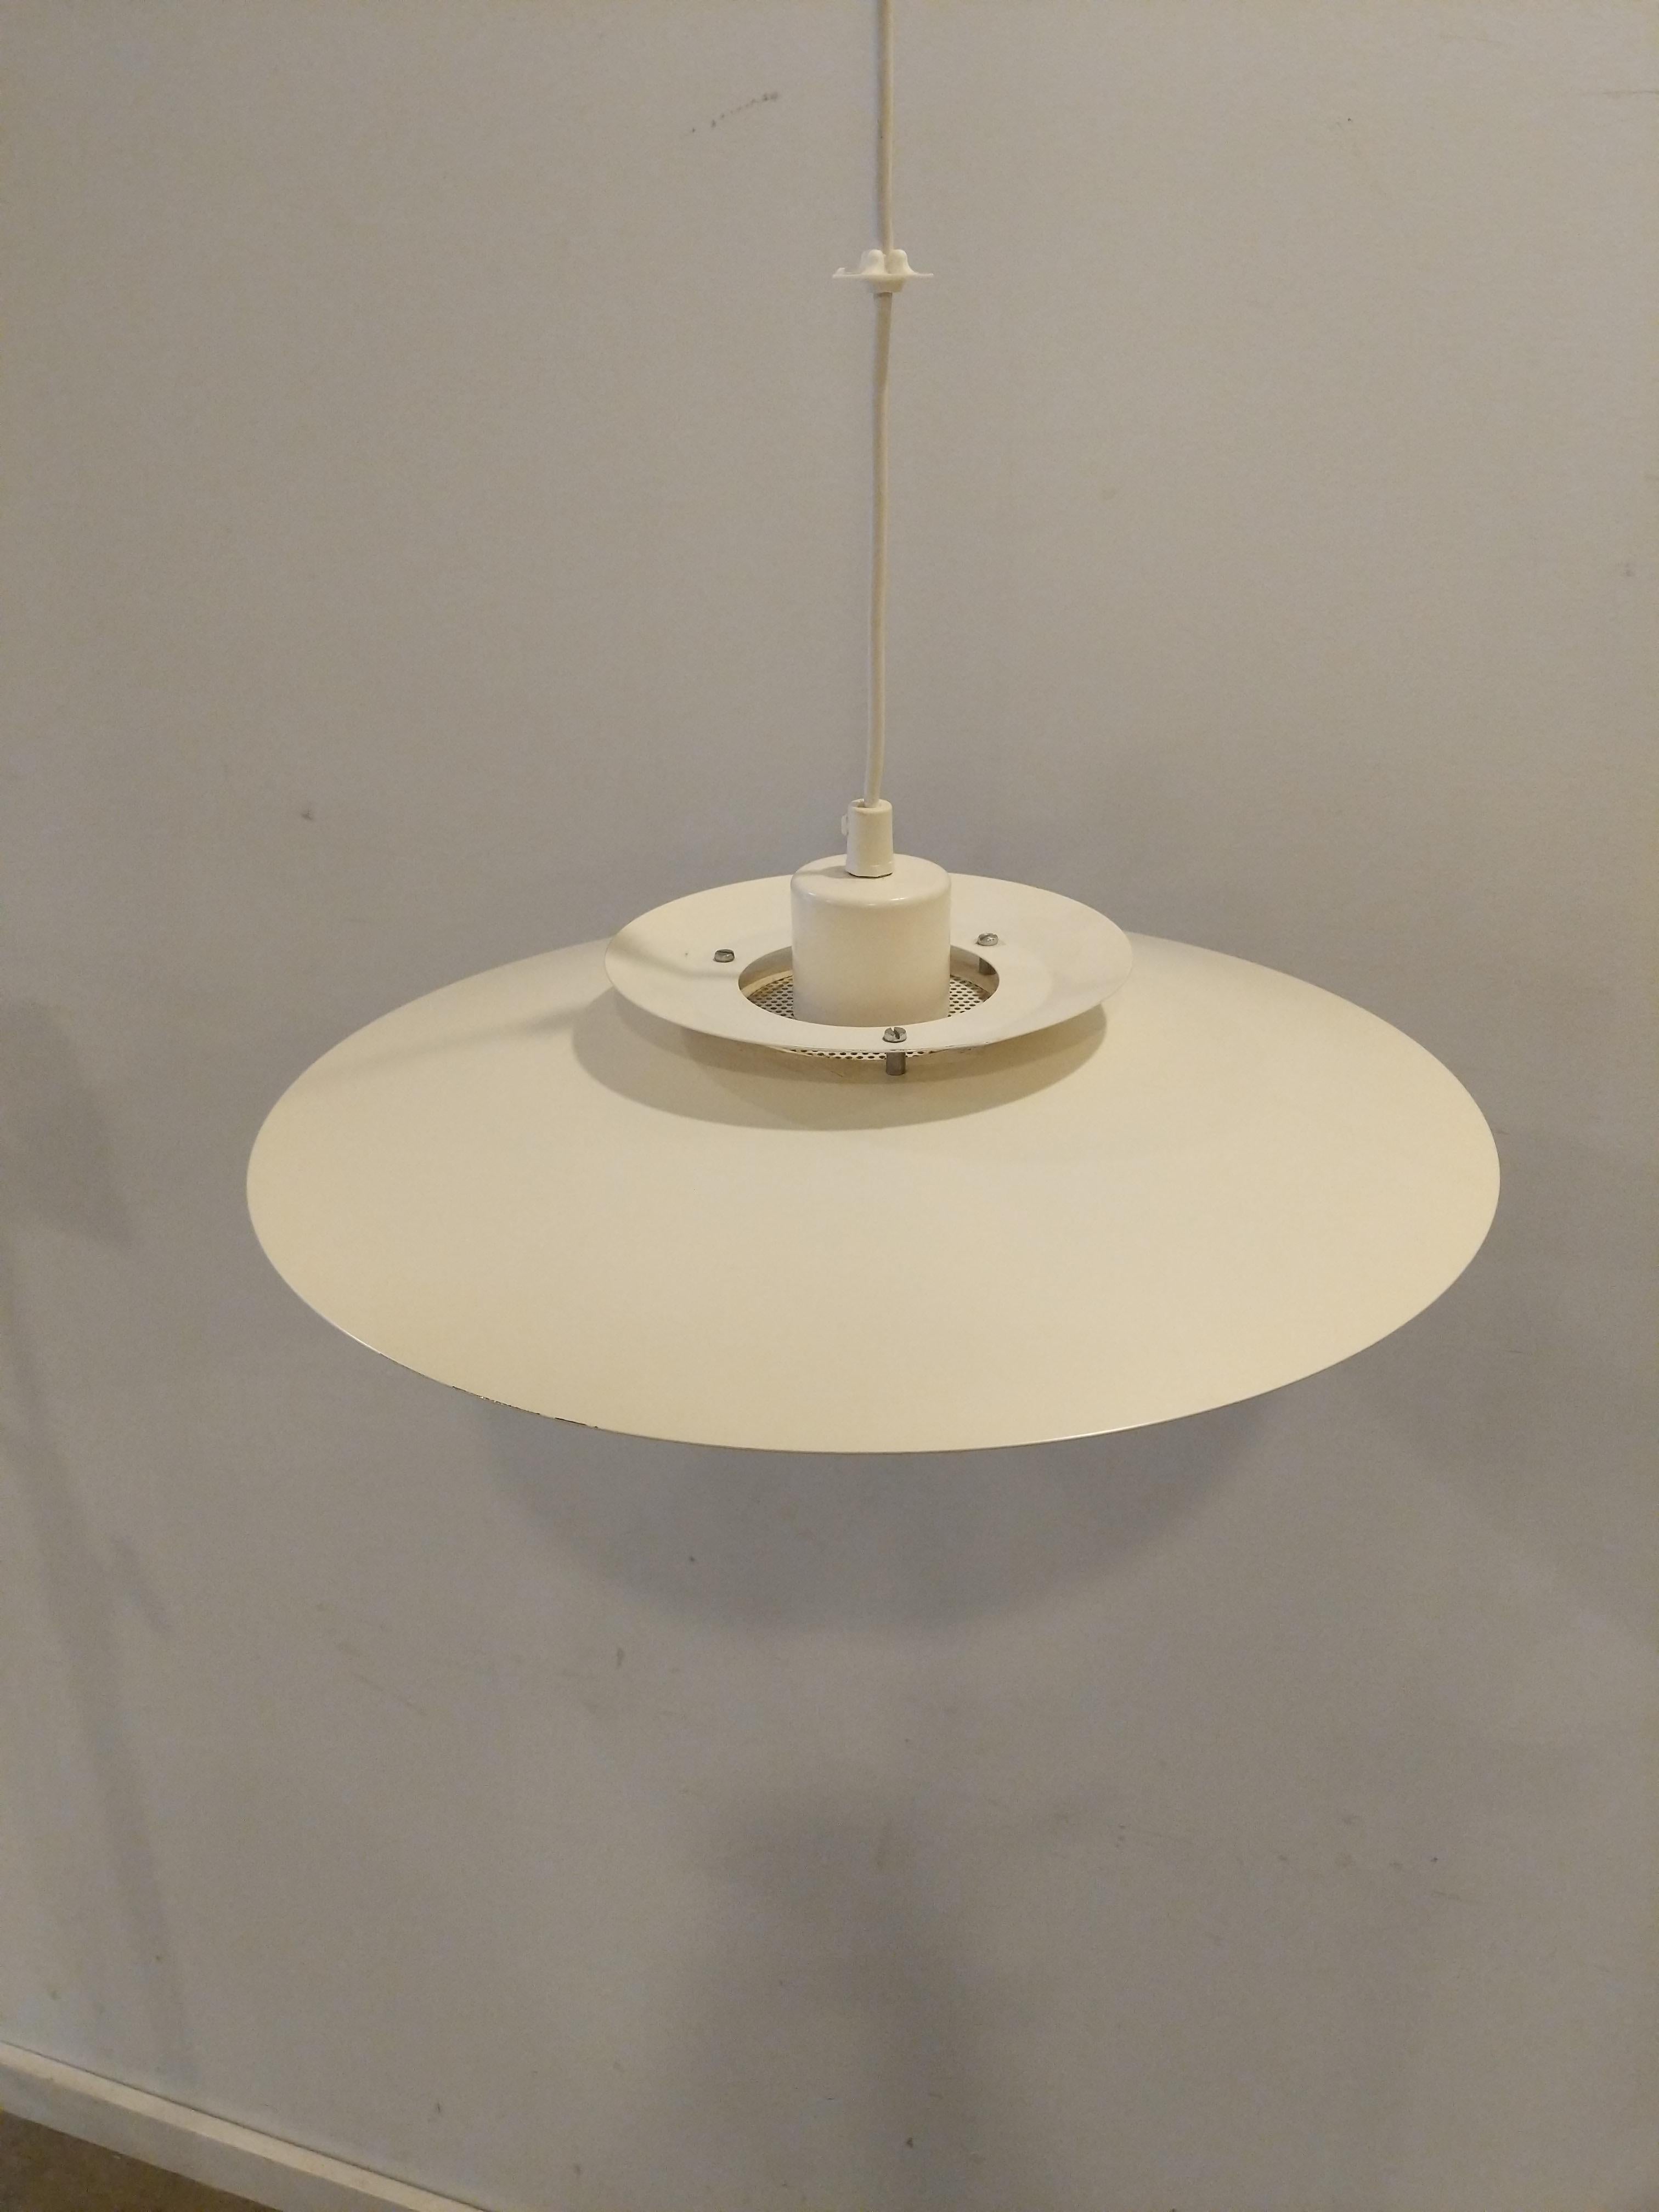 Authentic vintage mid century Danish / Scandinavian Modern hanging lamp / ceiling lamp / pendant light.

